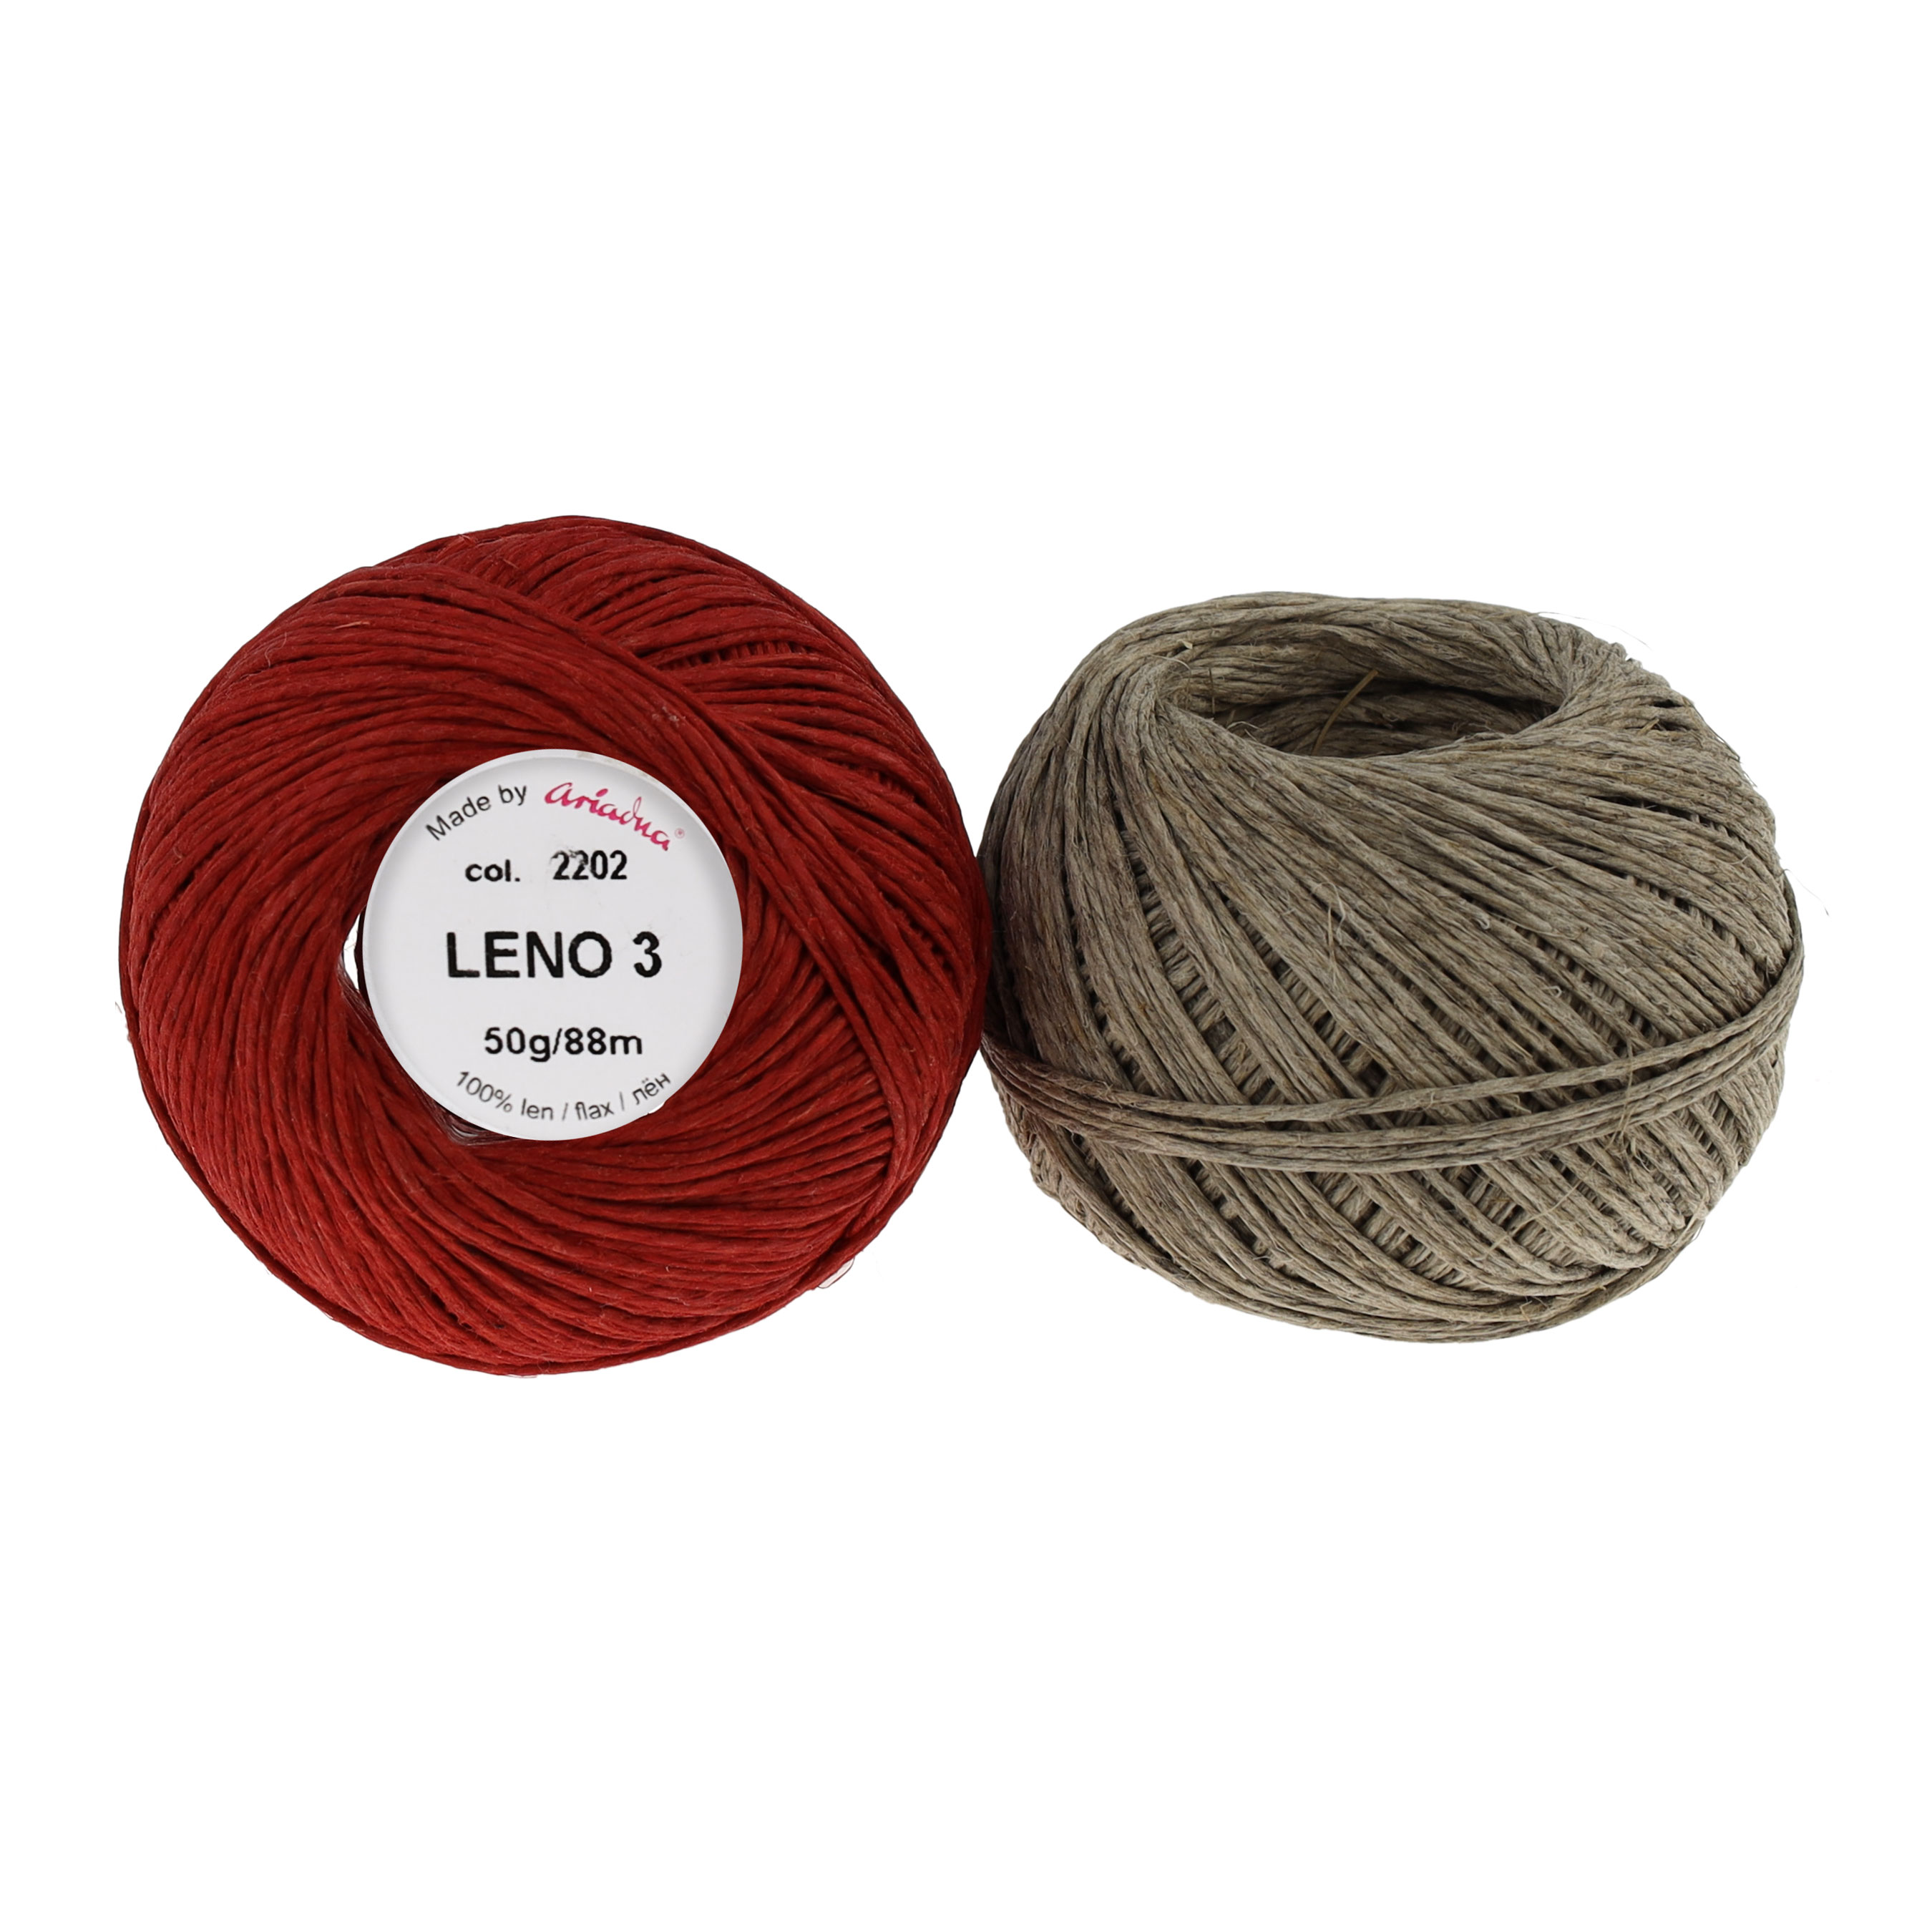 Linen, Flax Thread, thin cord Leno 3, 50g, 88m, Ariadna, Macrame cords